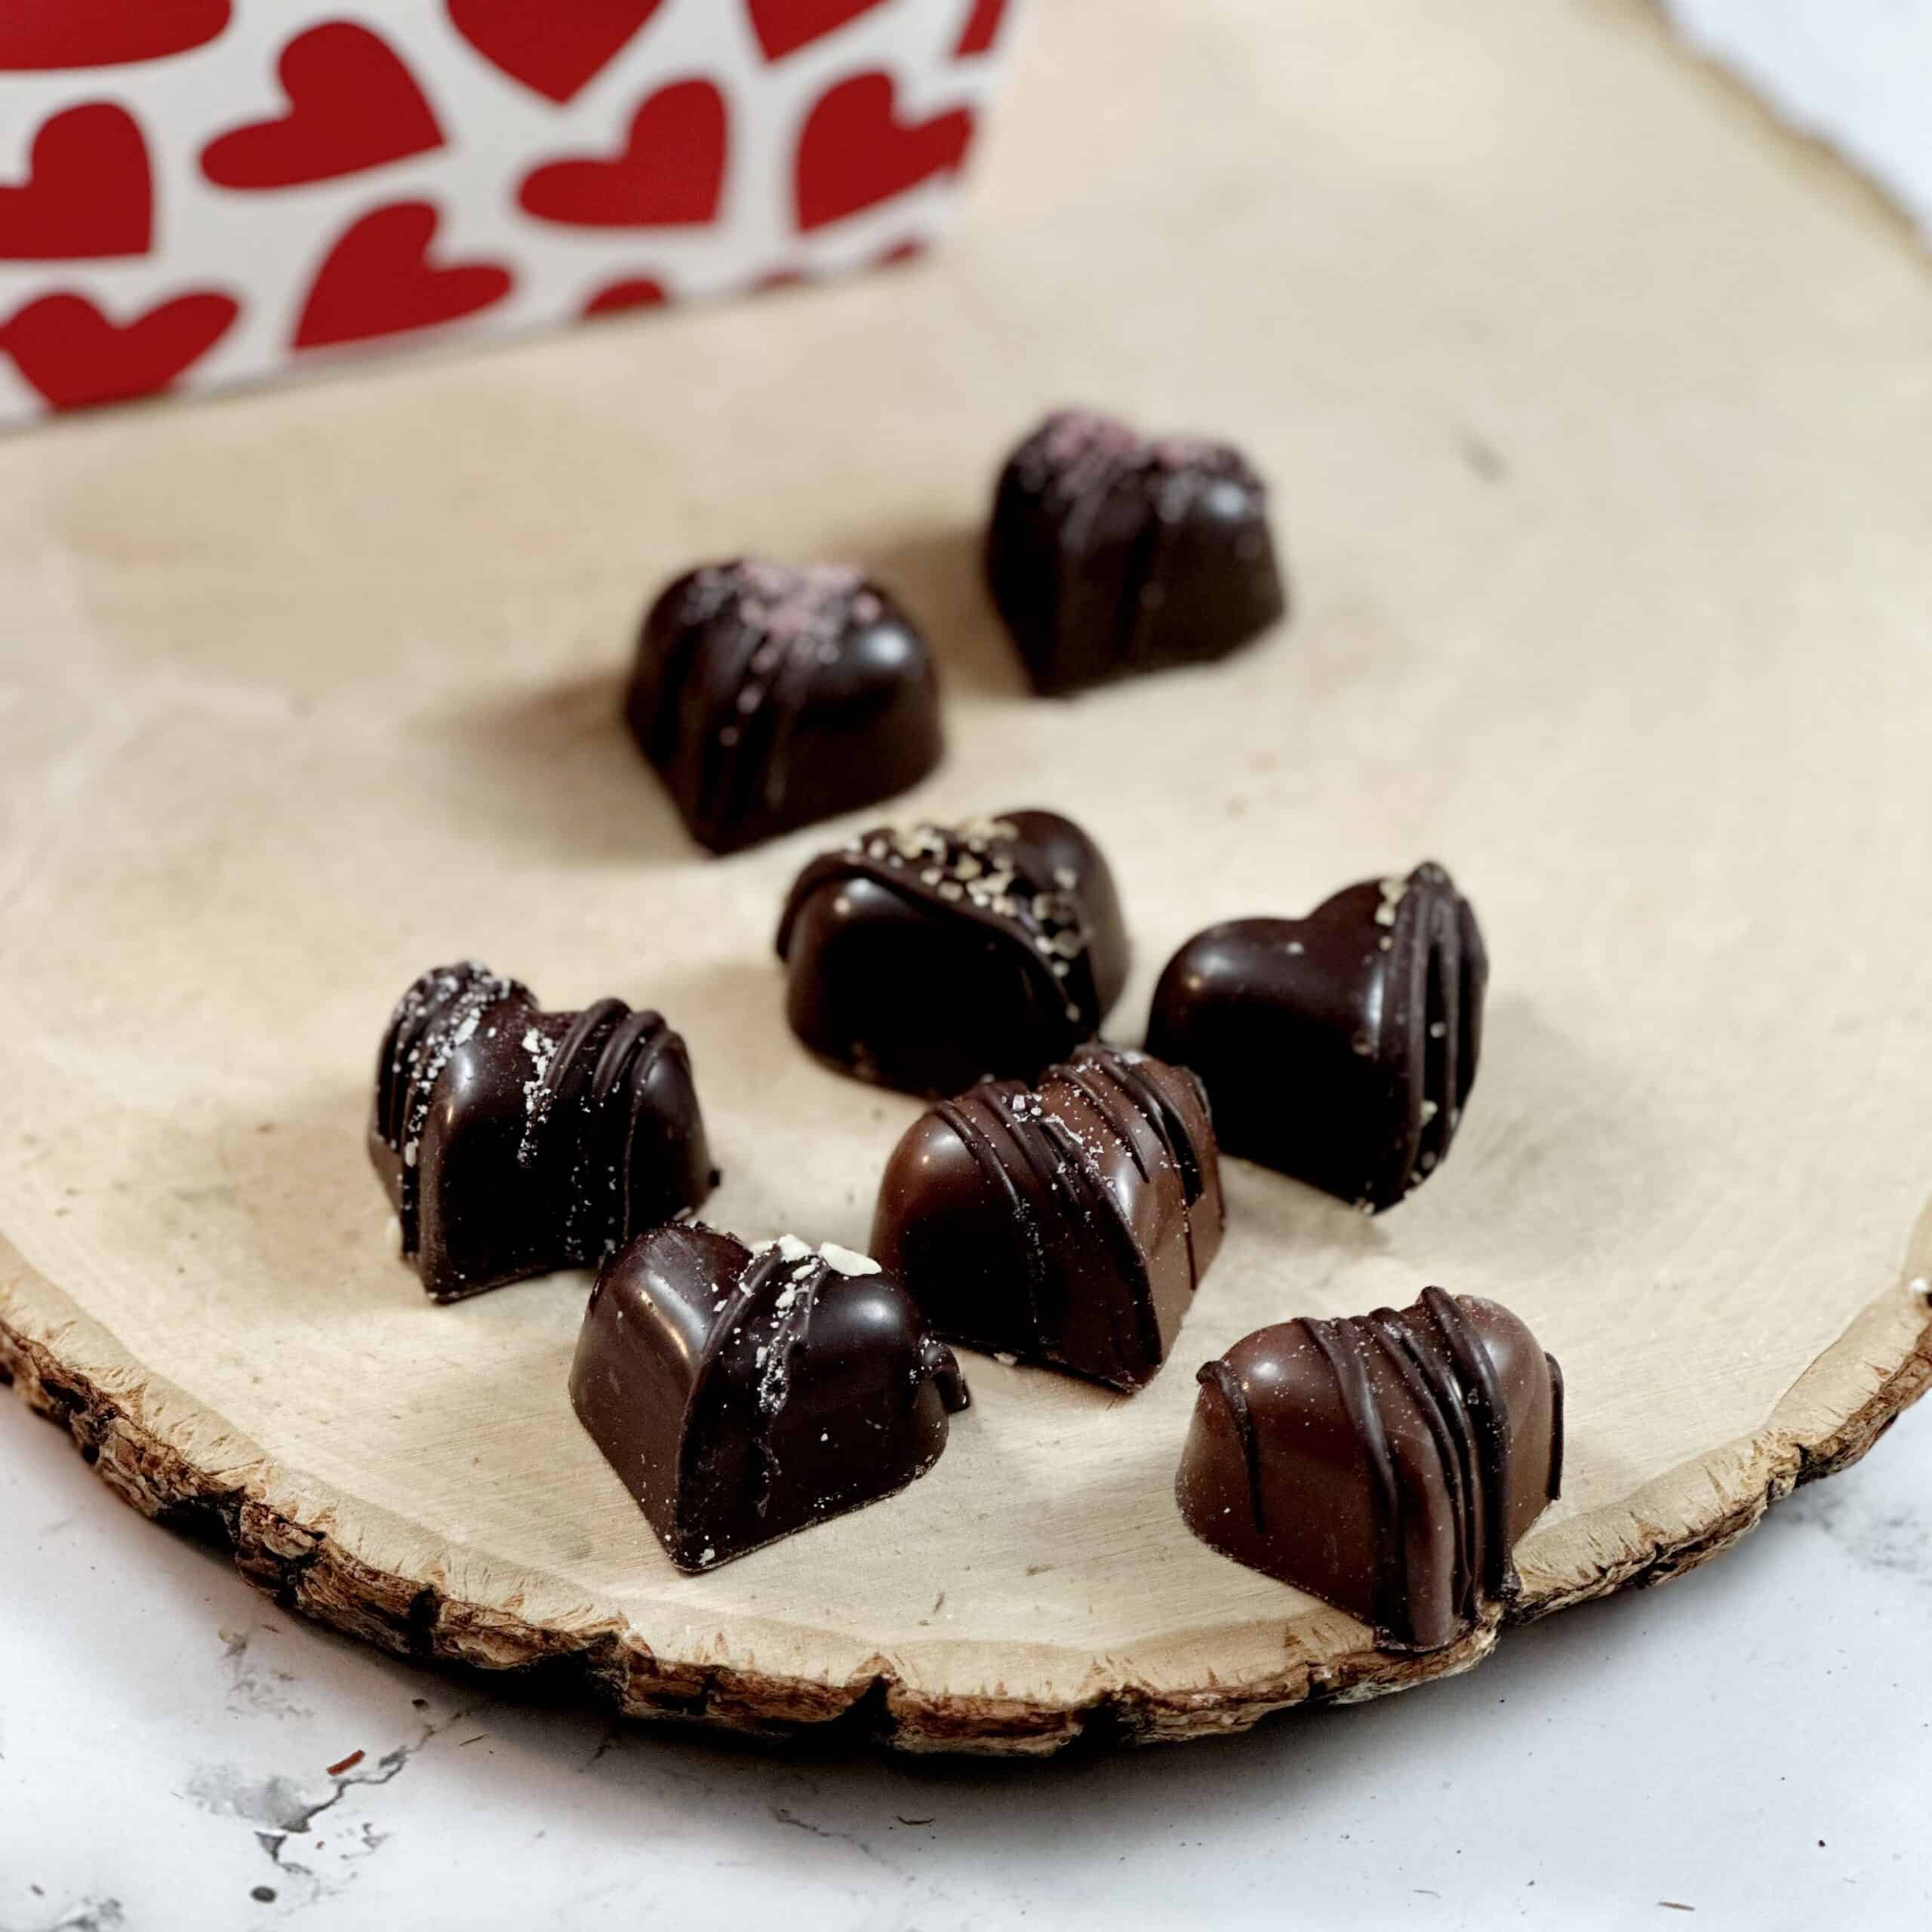 Small heart shaped truffles on a wood platter